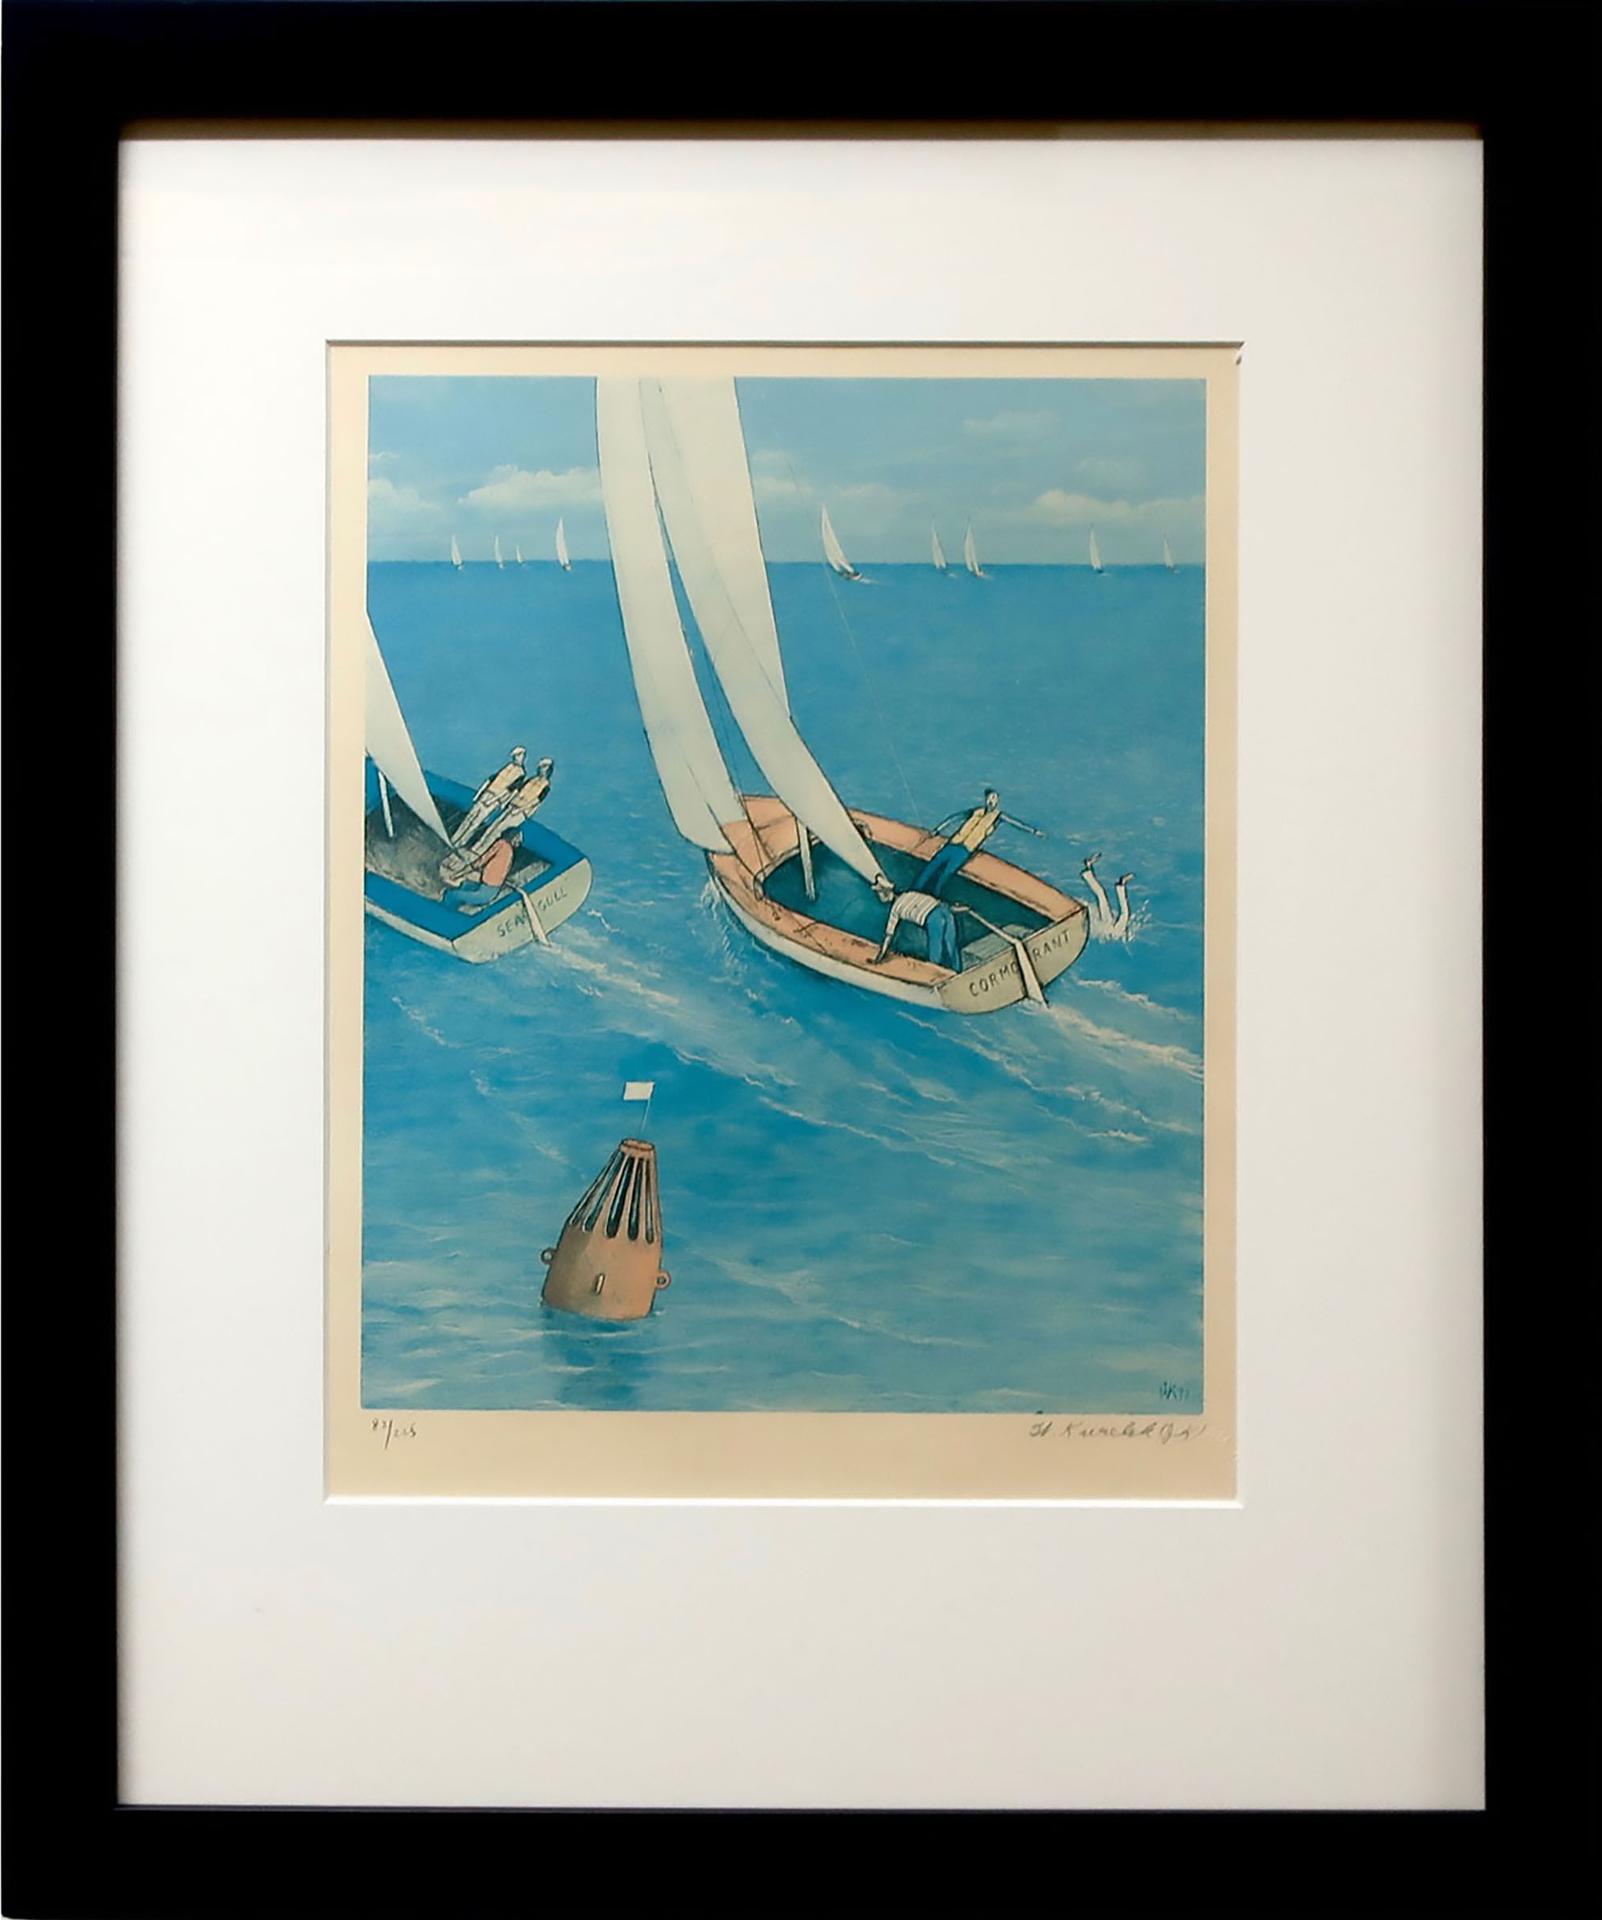 William Kurelek (1927-1977) - Sailing (From The Sports Folio, 1977)